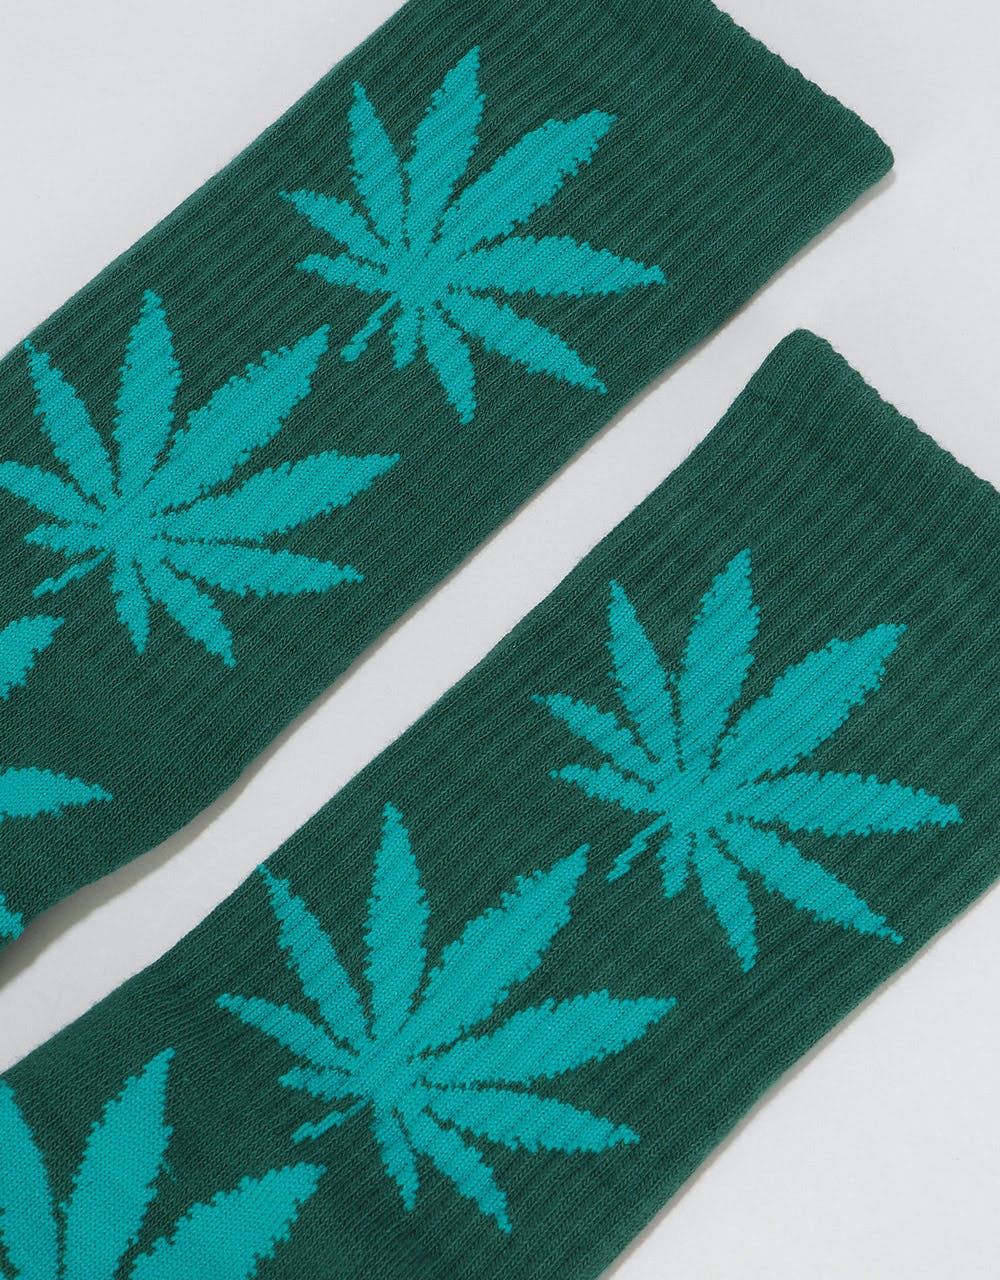 HUF Plantlife Socks - Jade